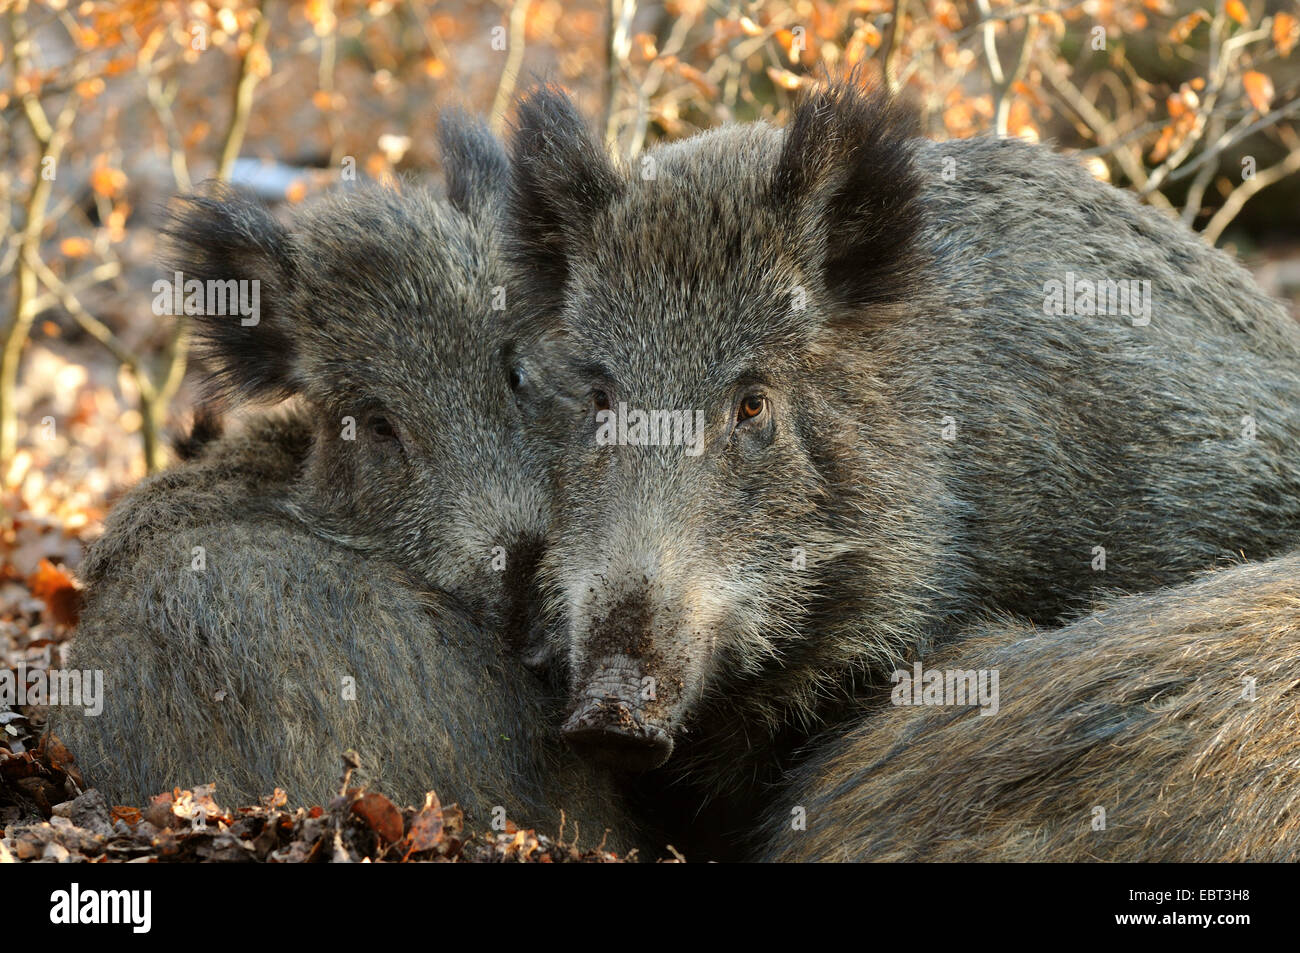 wild boar, pig, wild boar (Sus scrofa), four wild boars lying close together in autumn foliage, Germany, North Rhine-Westphalia Stock Photo